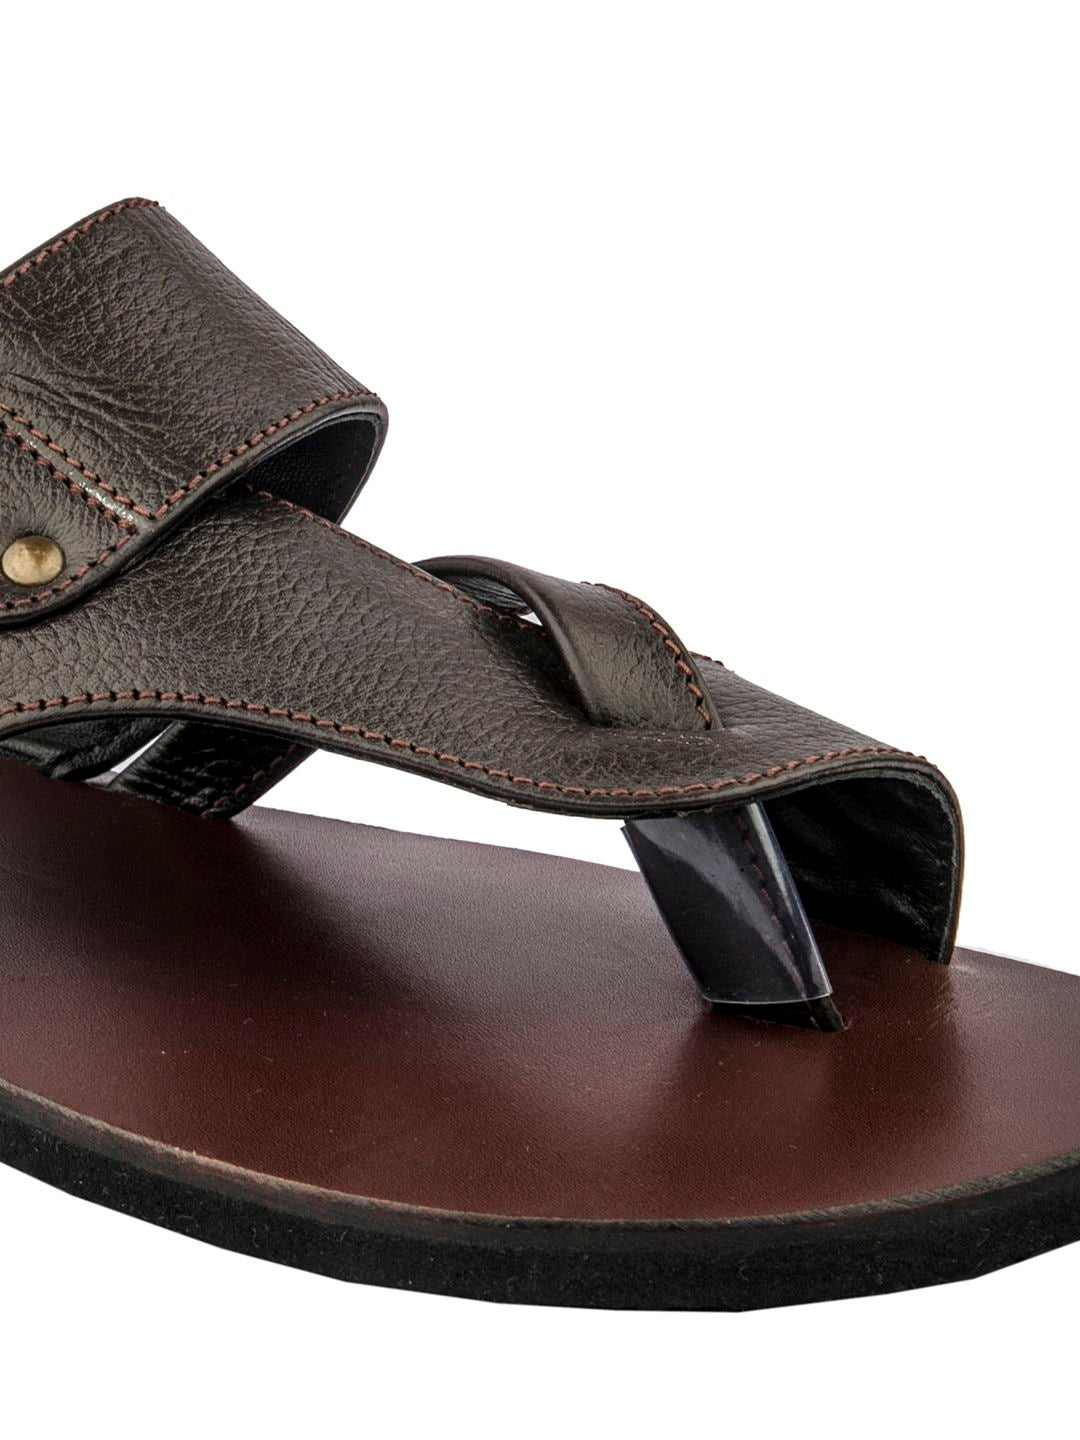 Classic Elegance: Handmade Brown Leather Sandals for Men